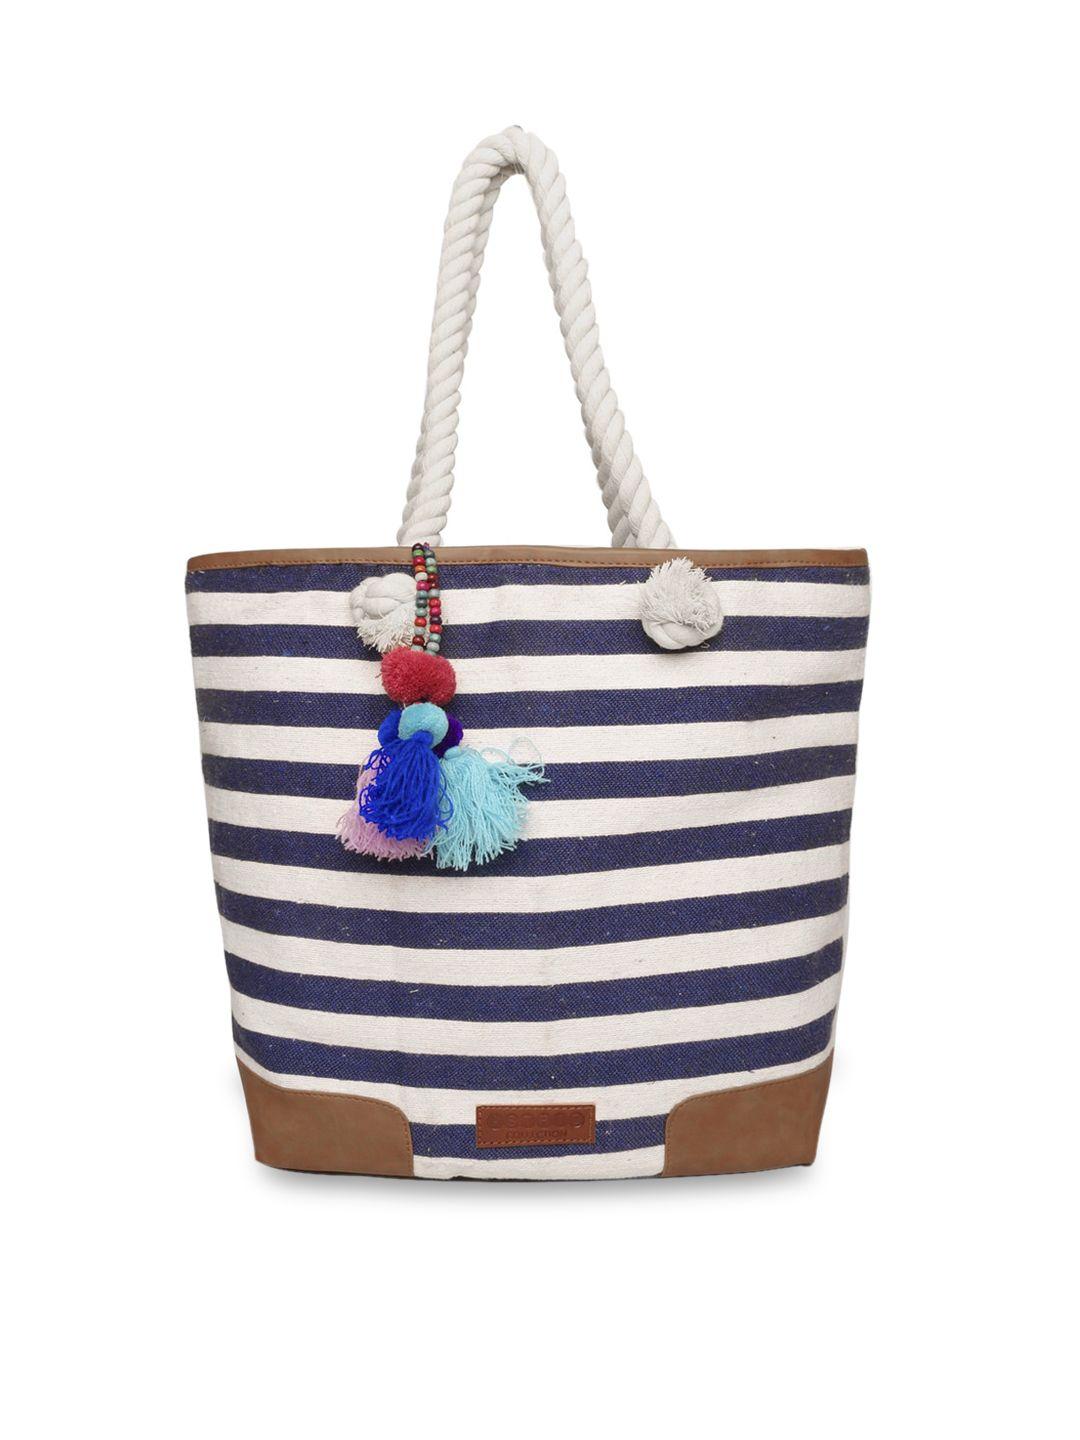 astrid blue & white striped tote bag